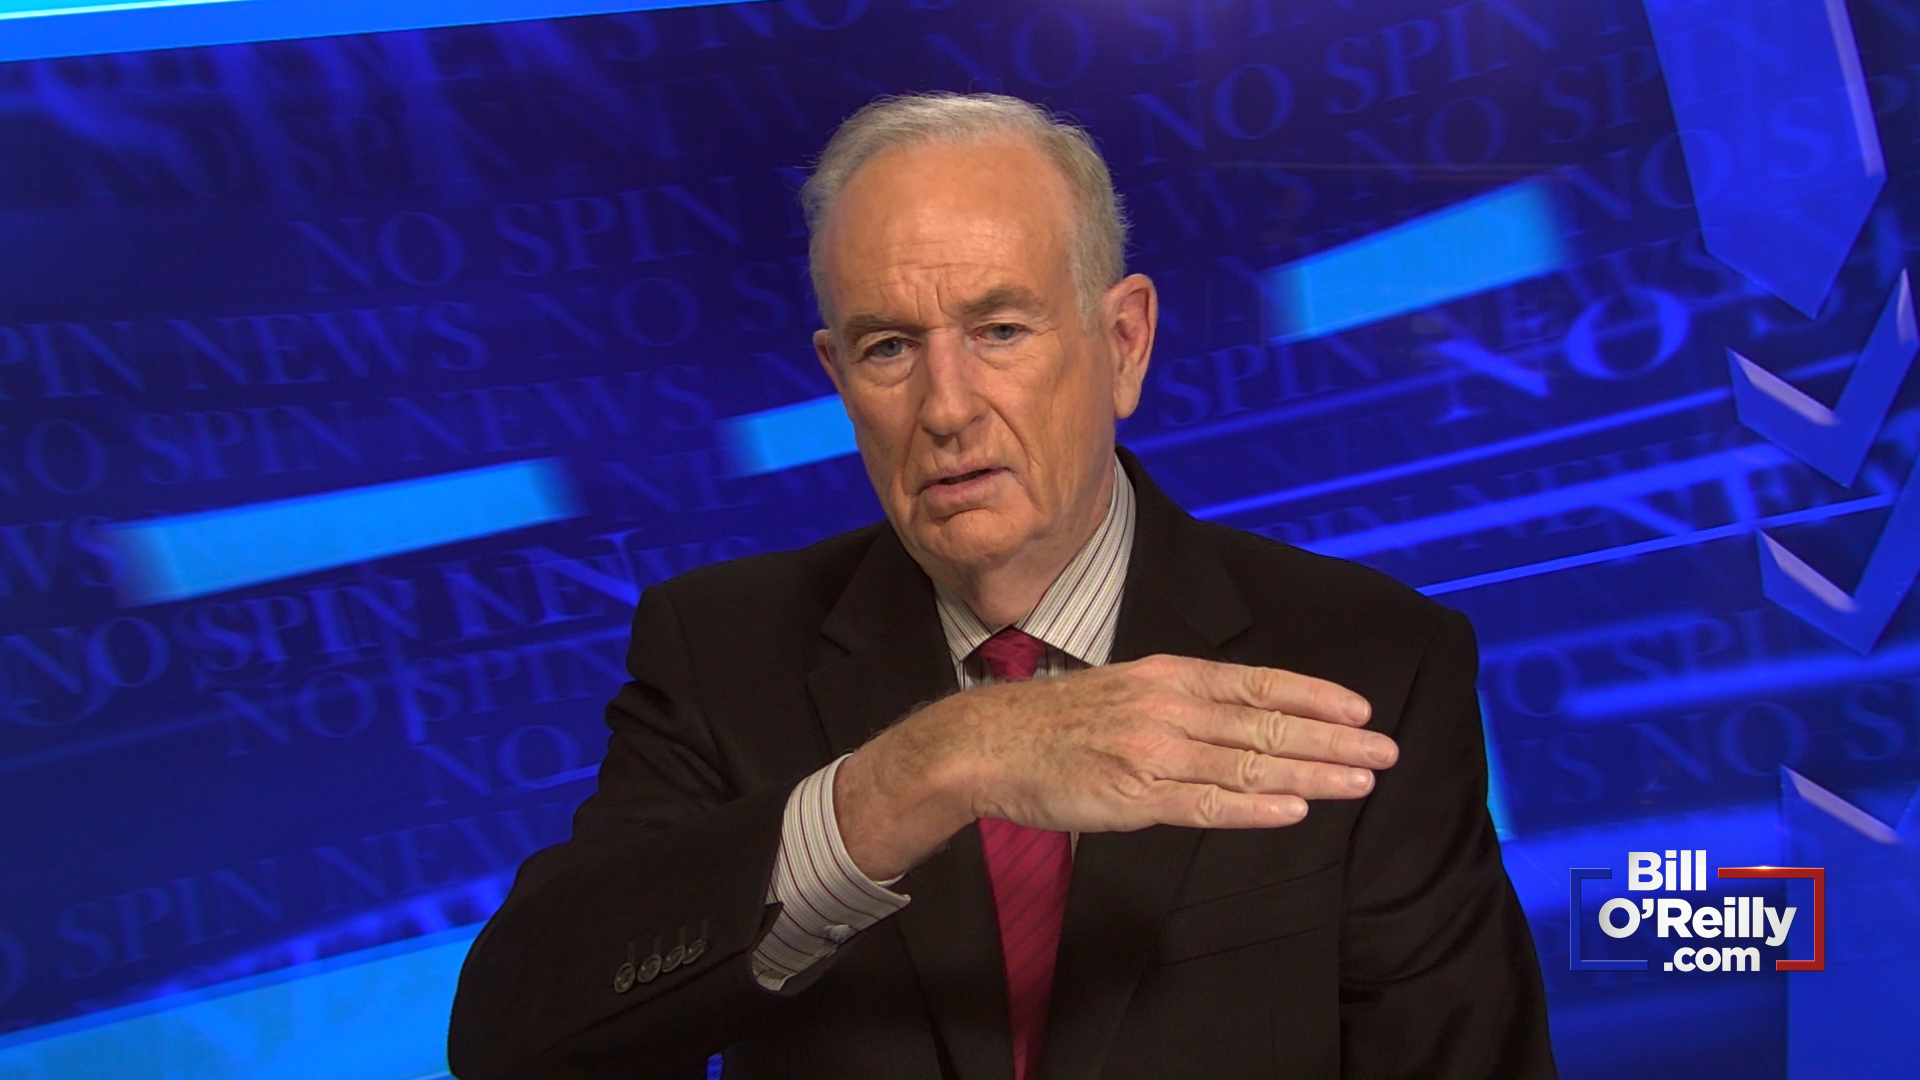 O'Reilly Unmasks a Conservative Phony